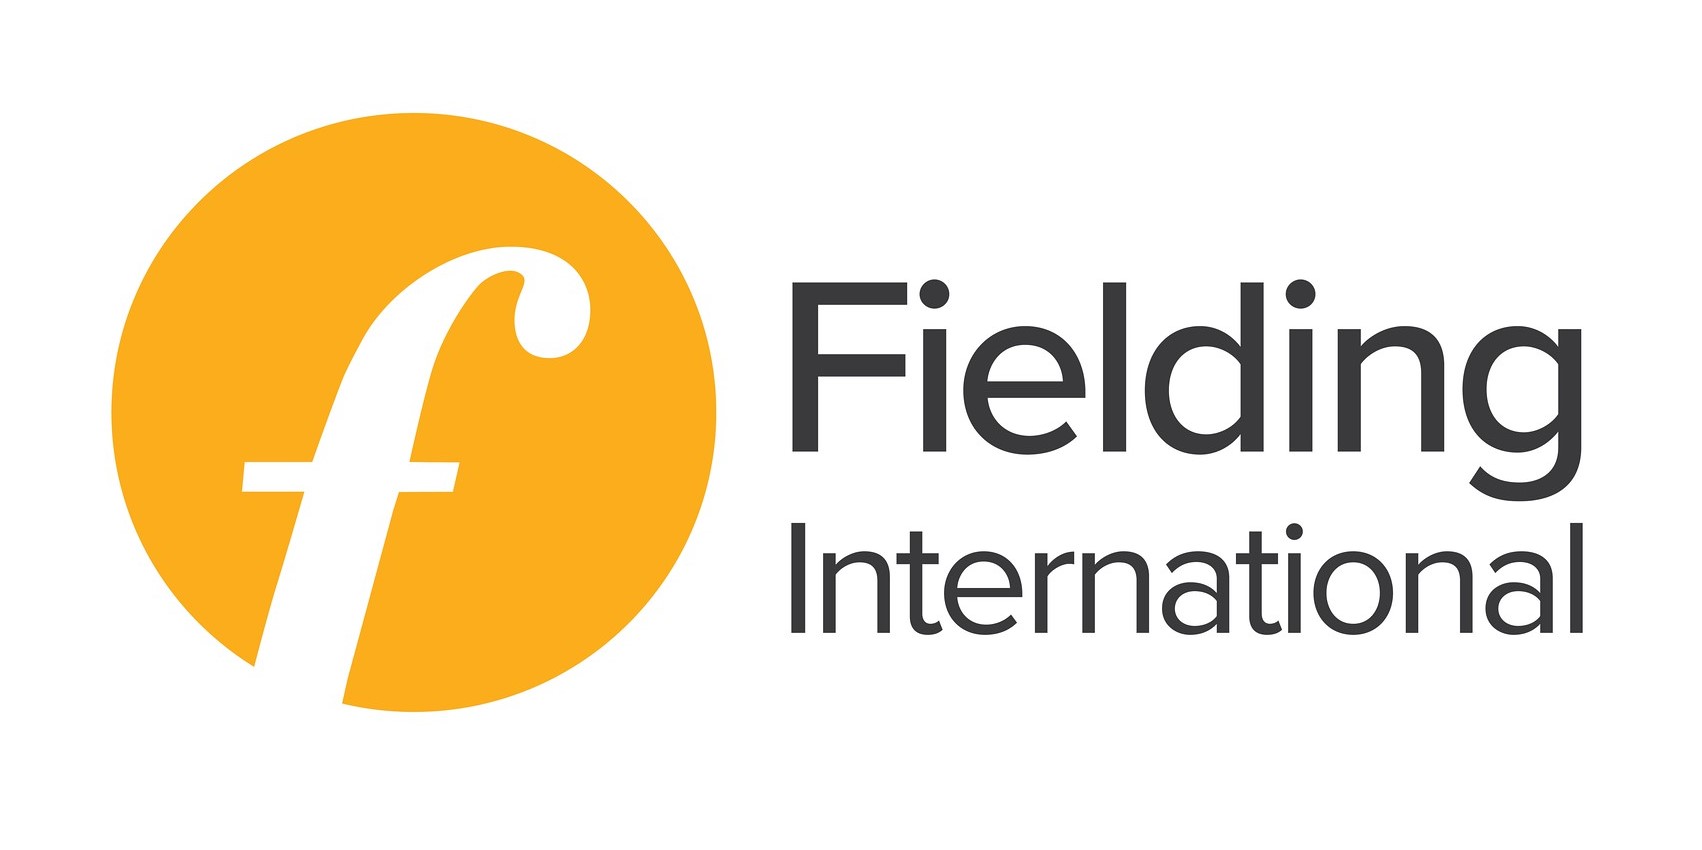 Fielding International